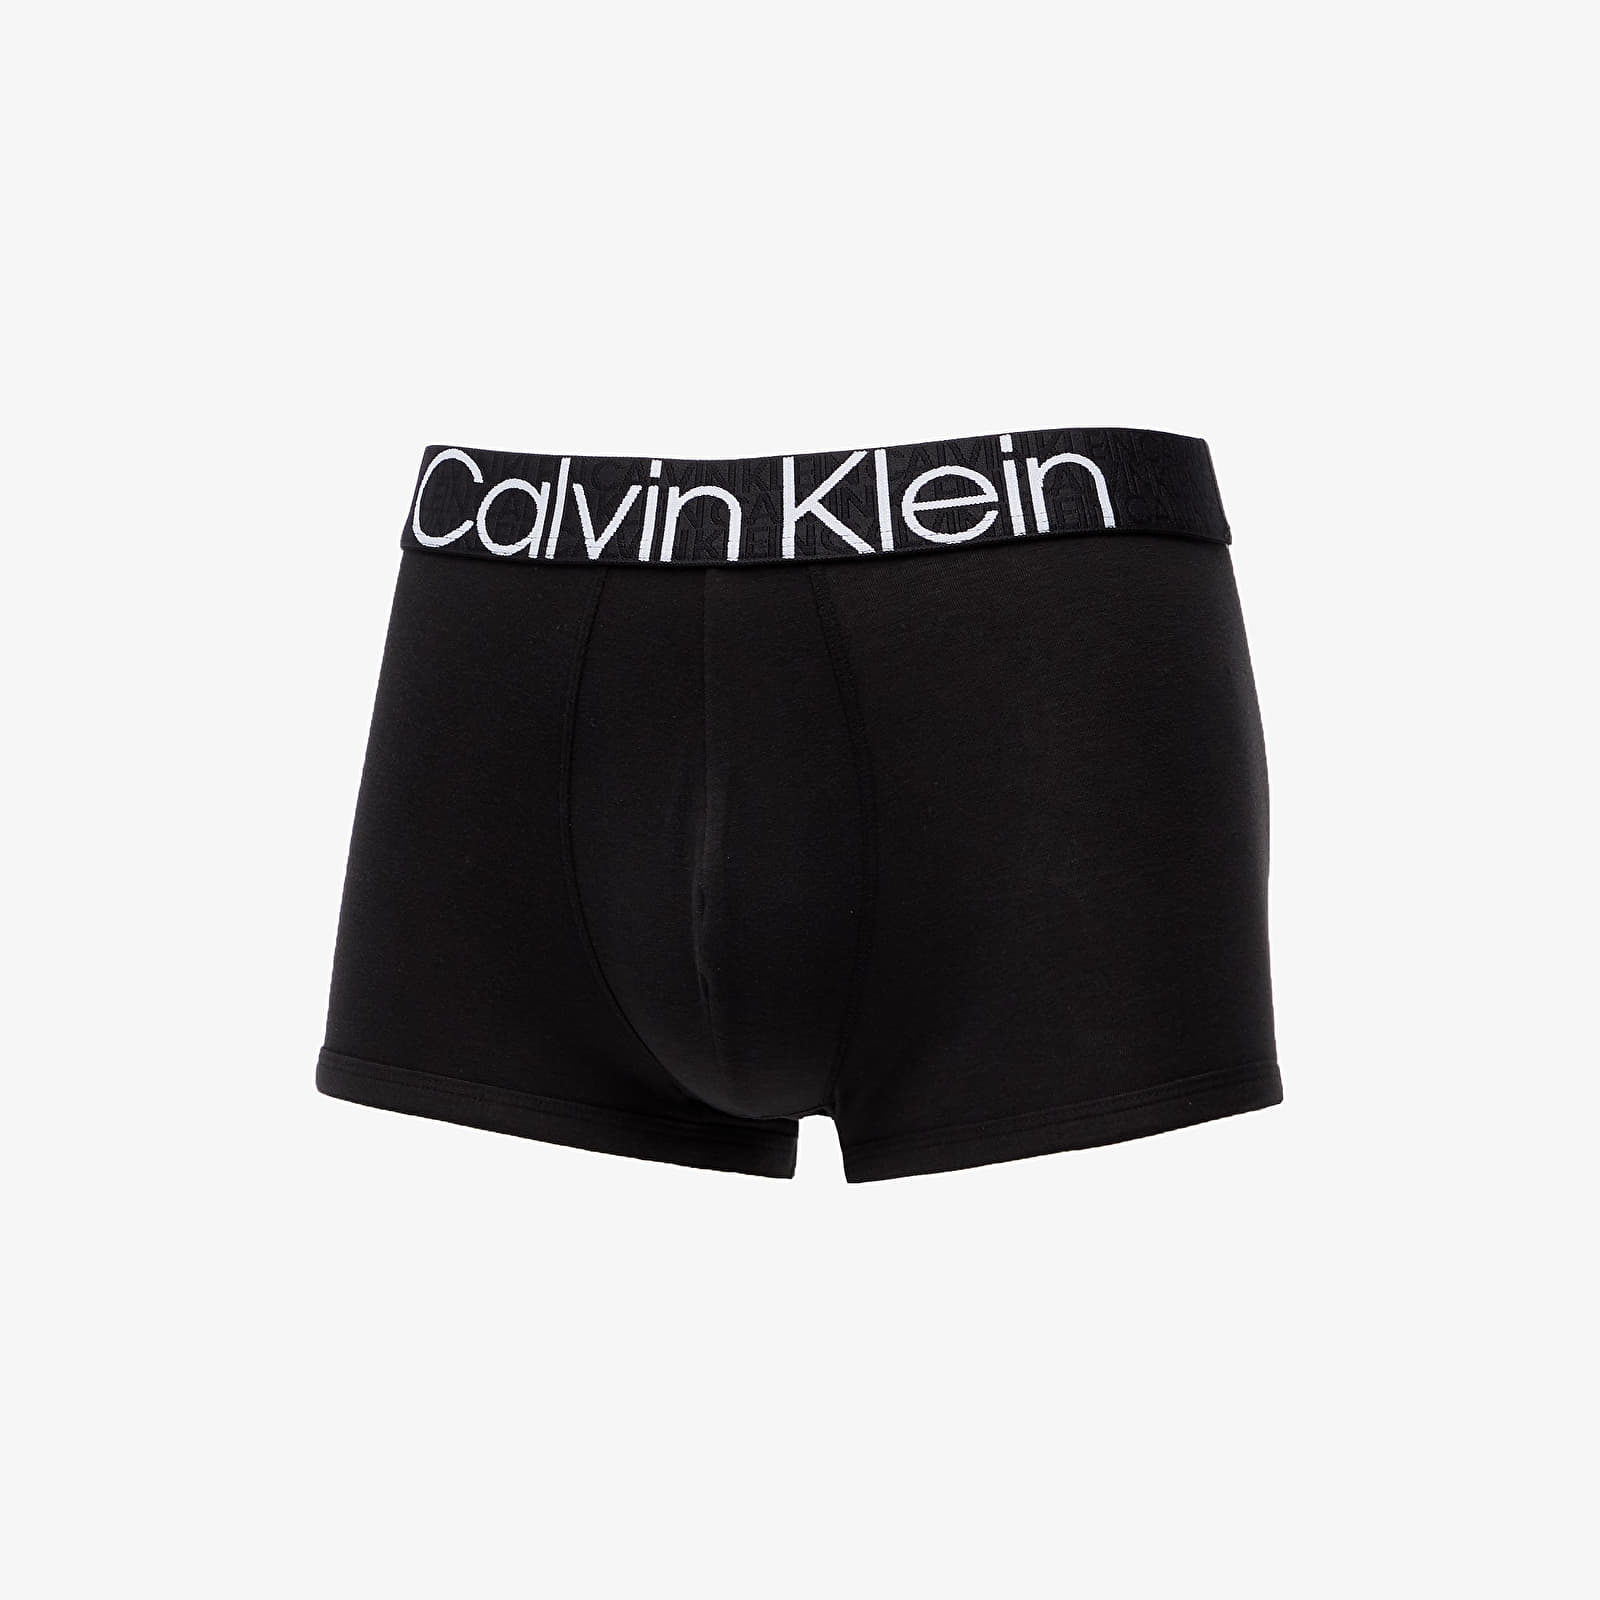 Boxershorts Calvin Klein Trunks Black